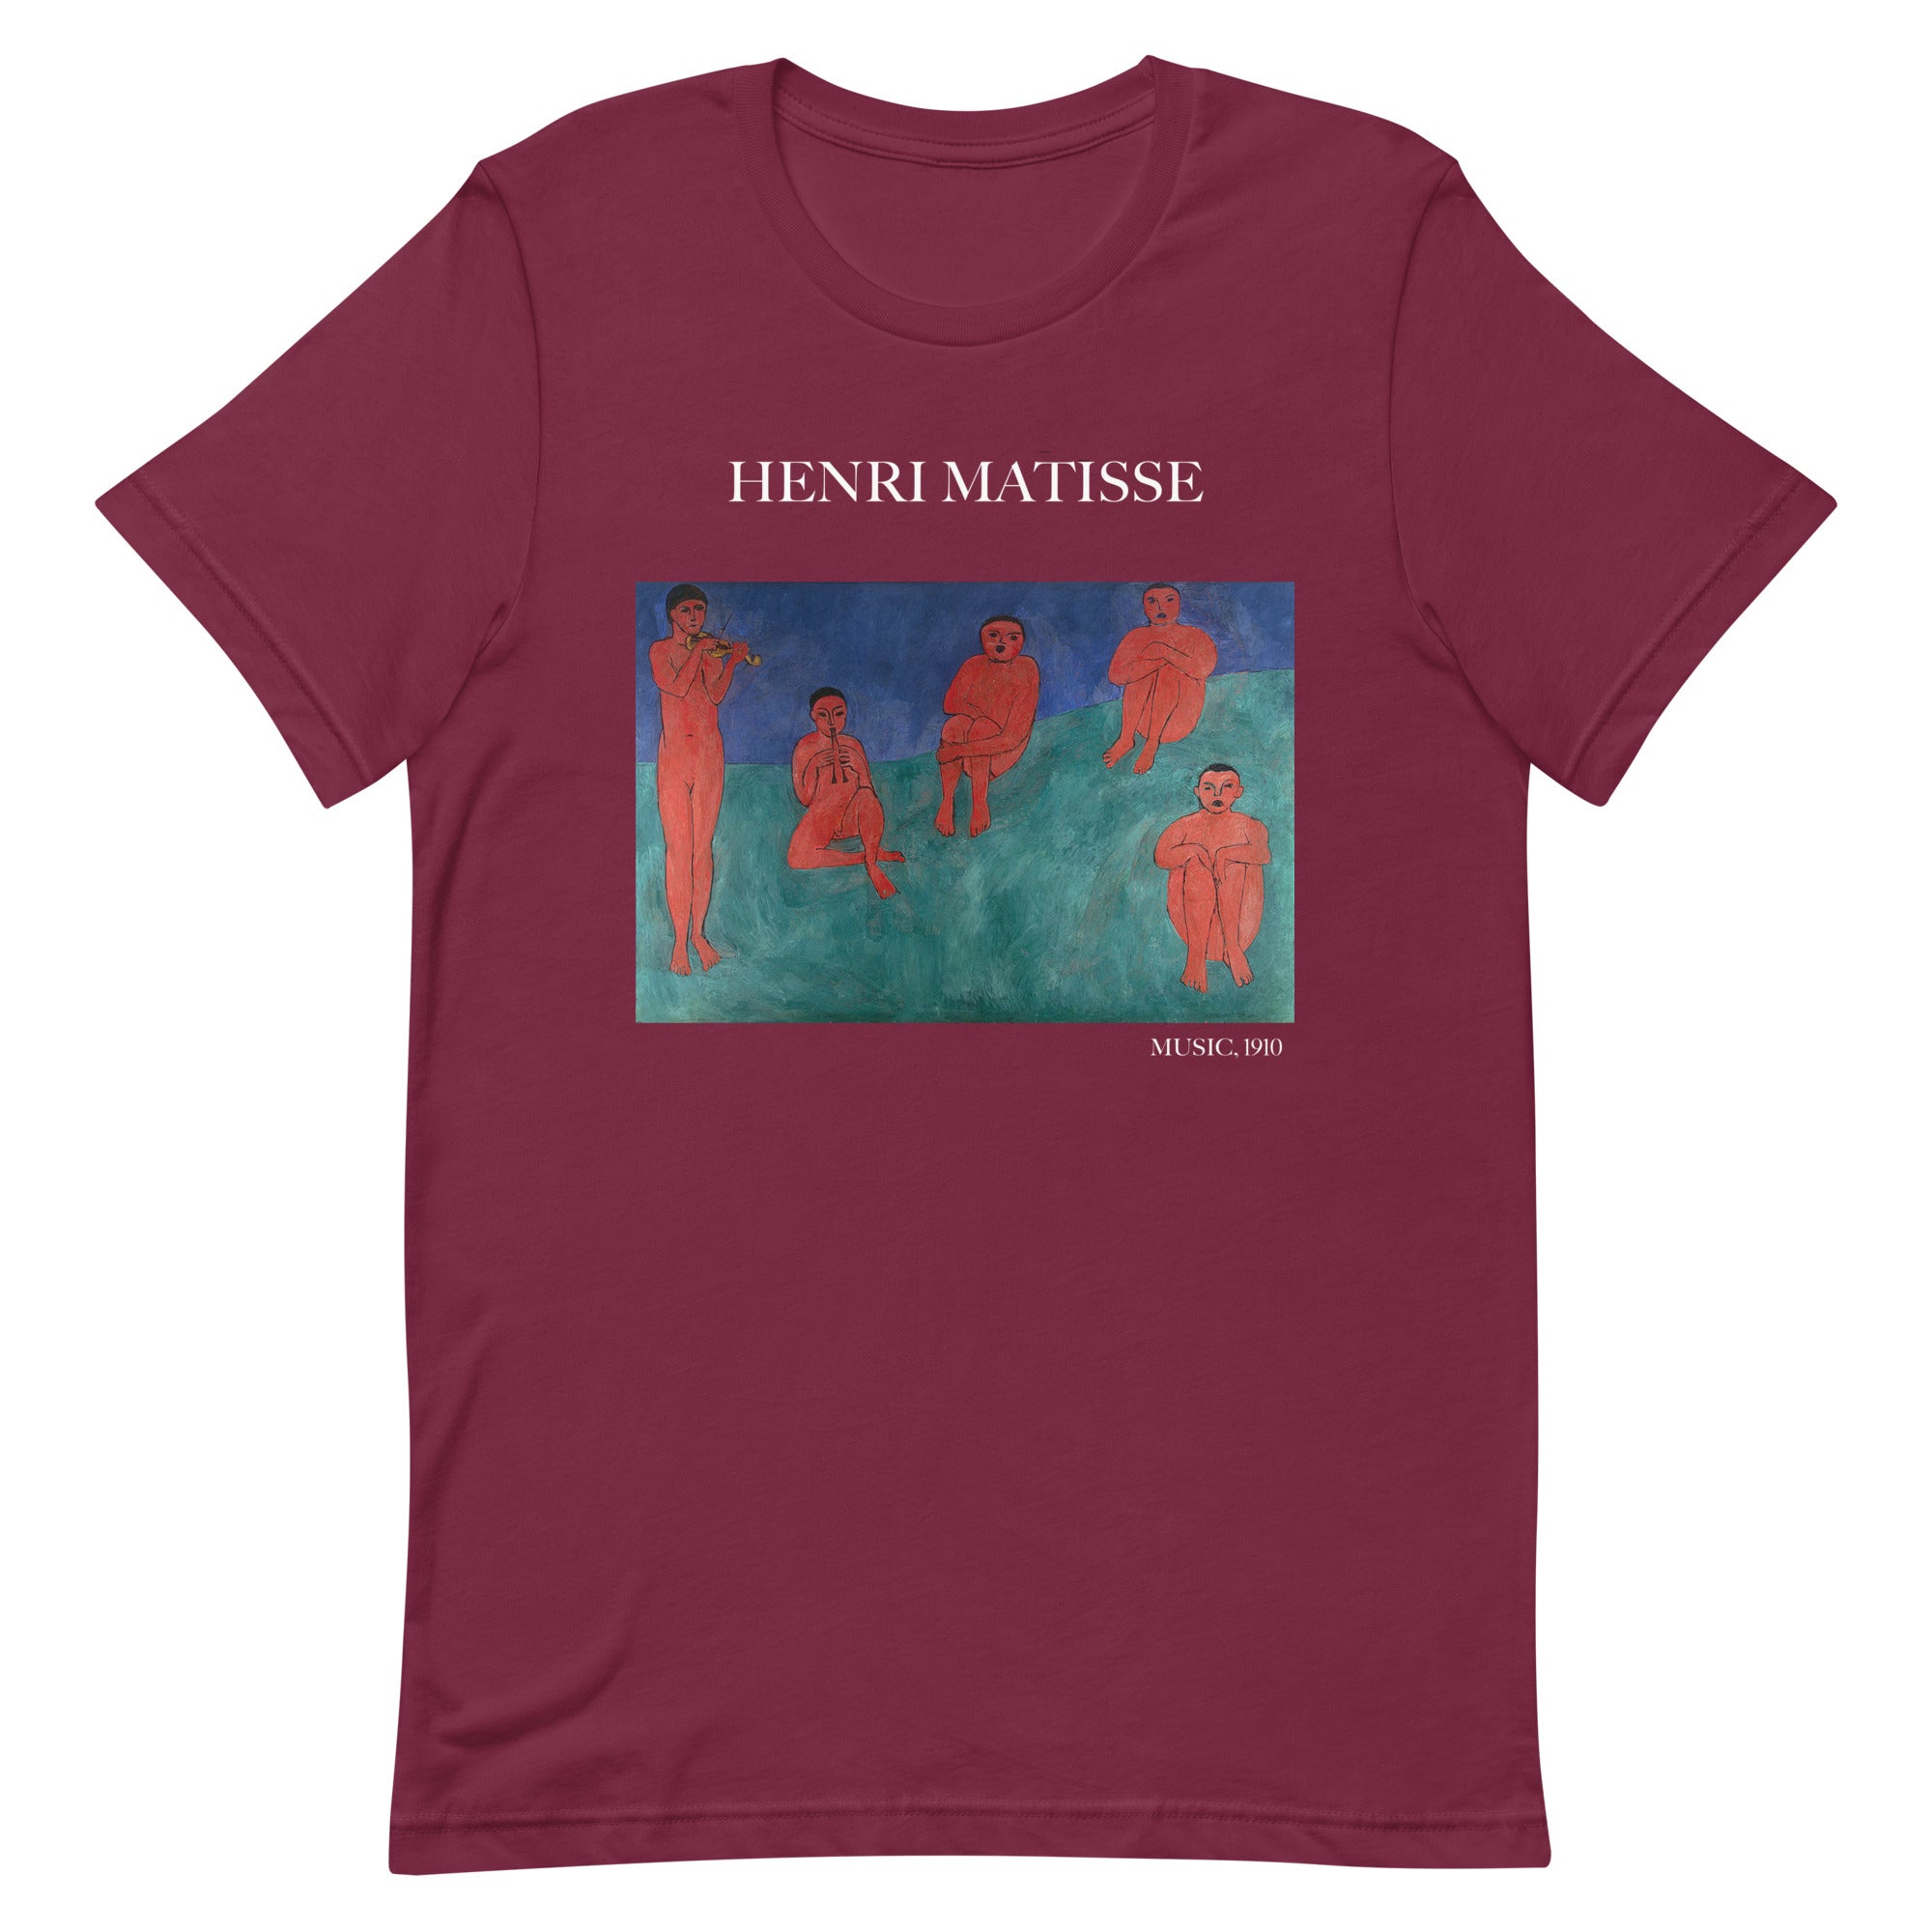 Henri Matisse 'Music' Famous Painting T-Shirt | Unisex Classic Art Tee